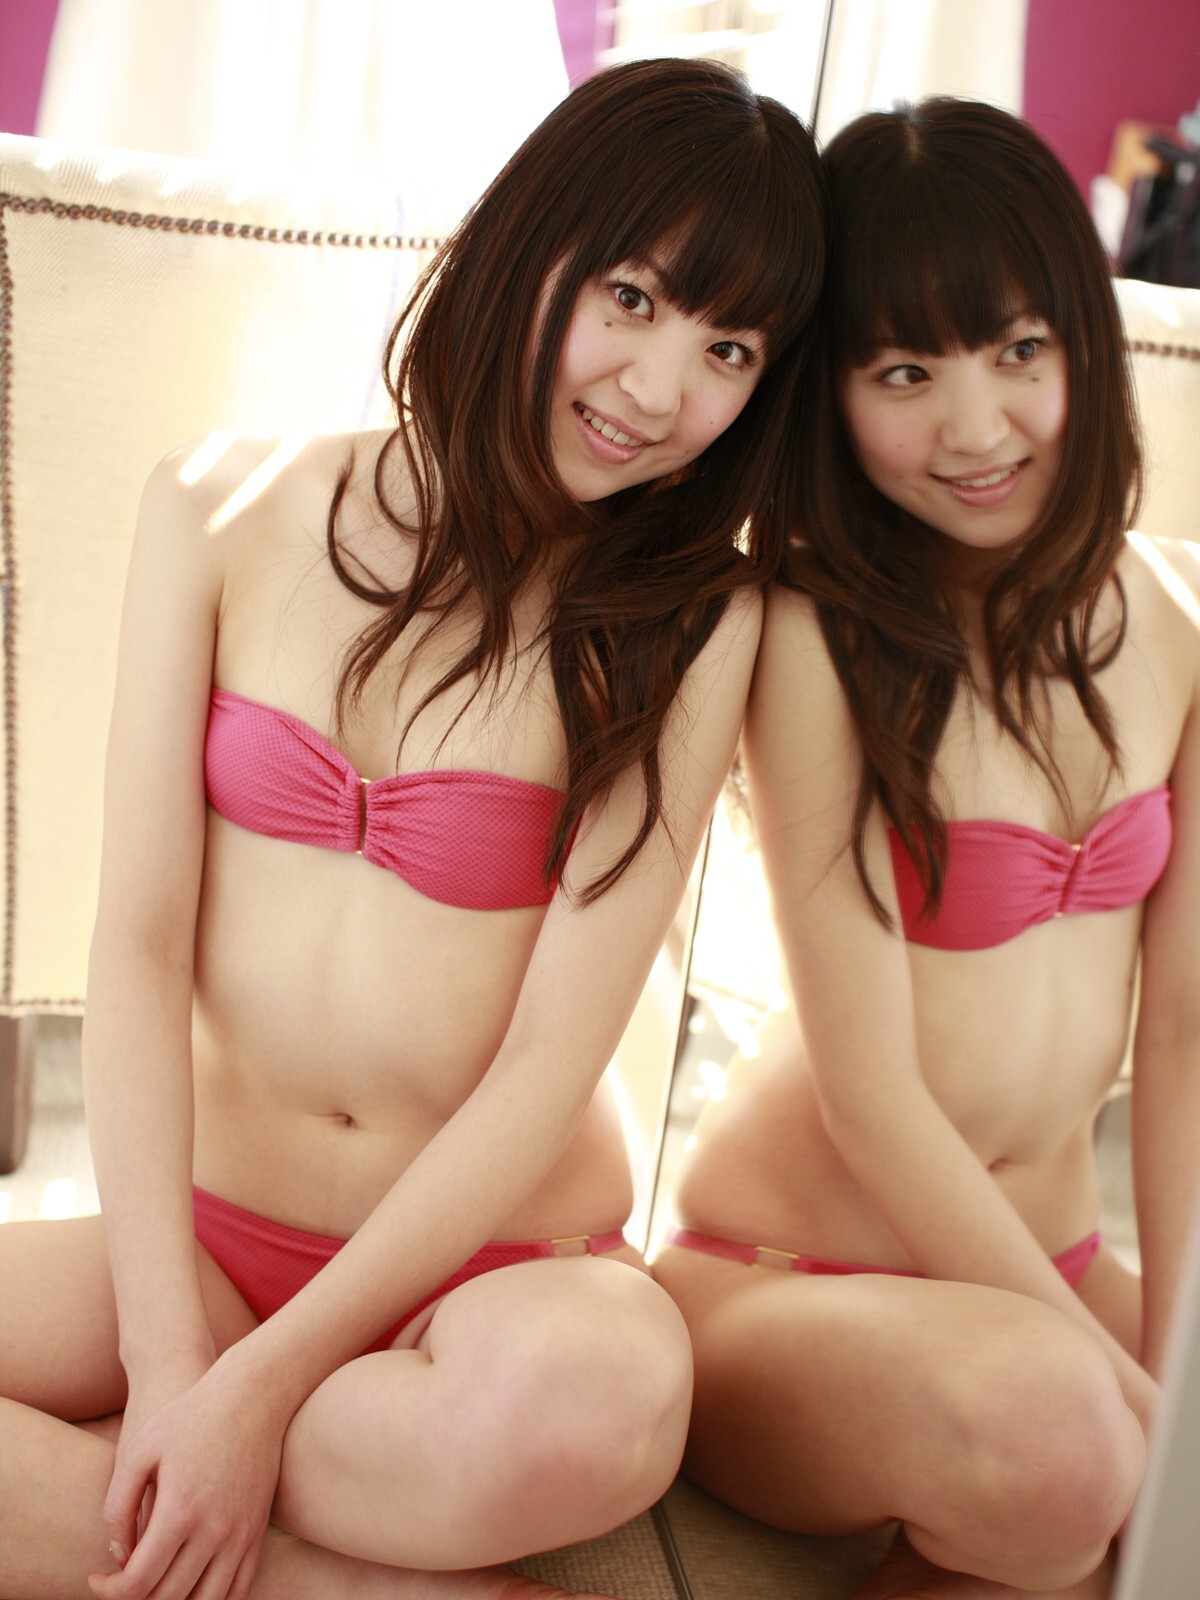 Kazuoka[ Sabra.net ]June 21, 2012 Japan sexy girls pictures